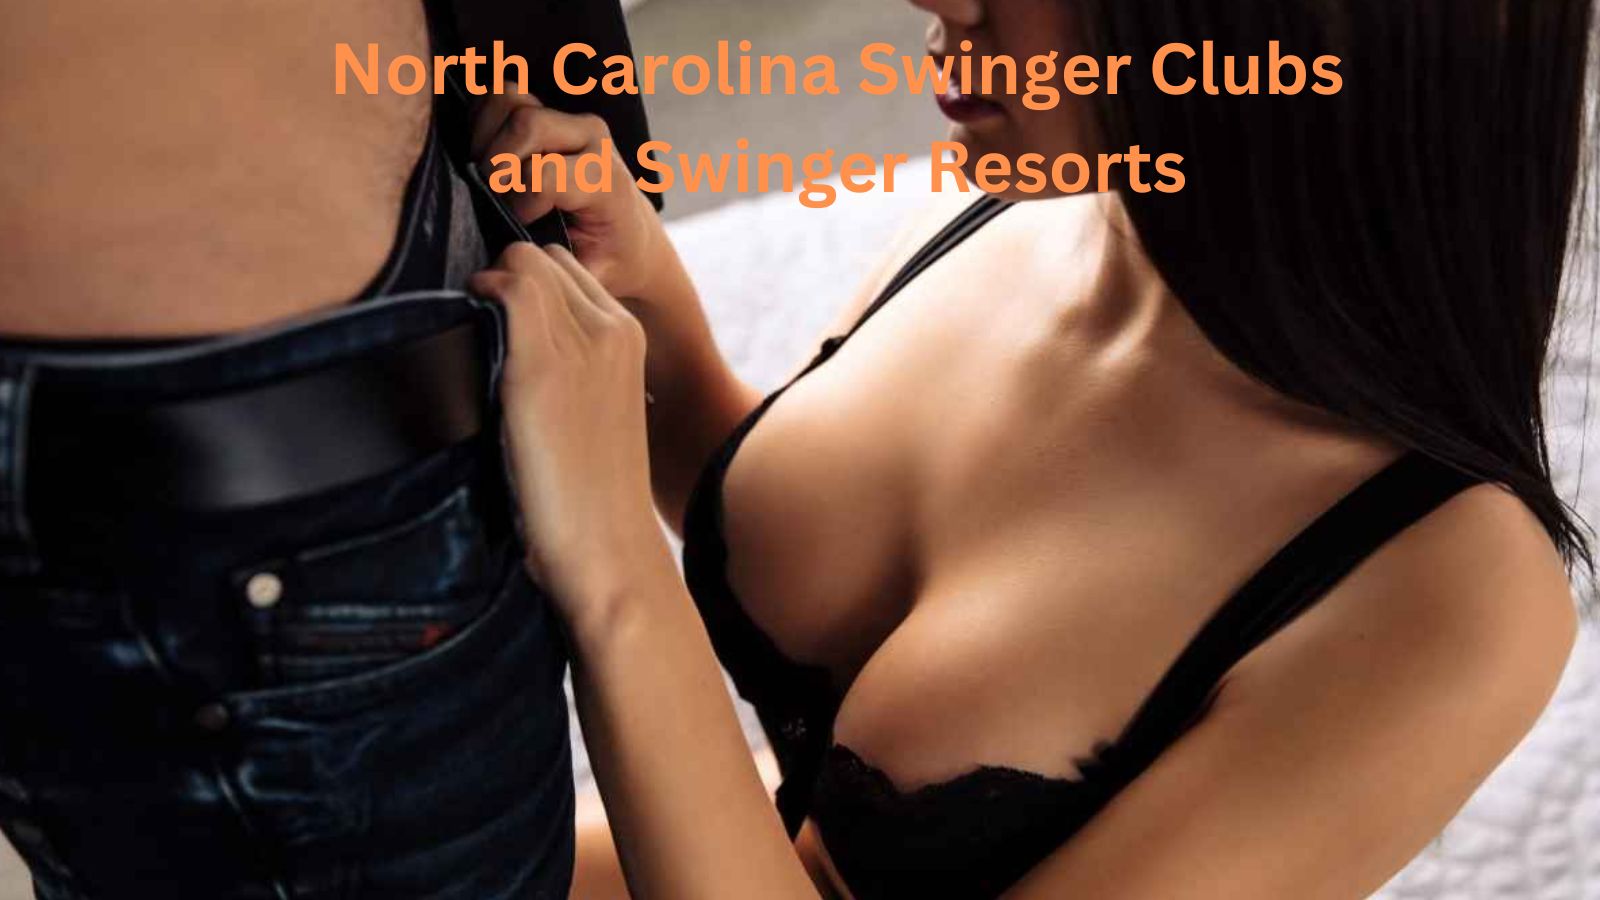 Topless Beach South Carolina - 2023 North Carolina Swinger Clubs and Resorts: Top fun swinger spots